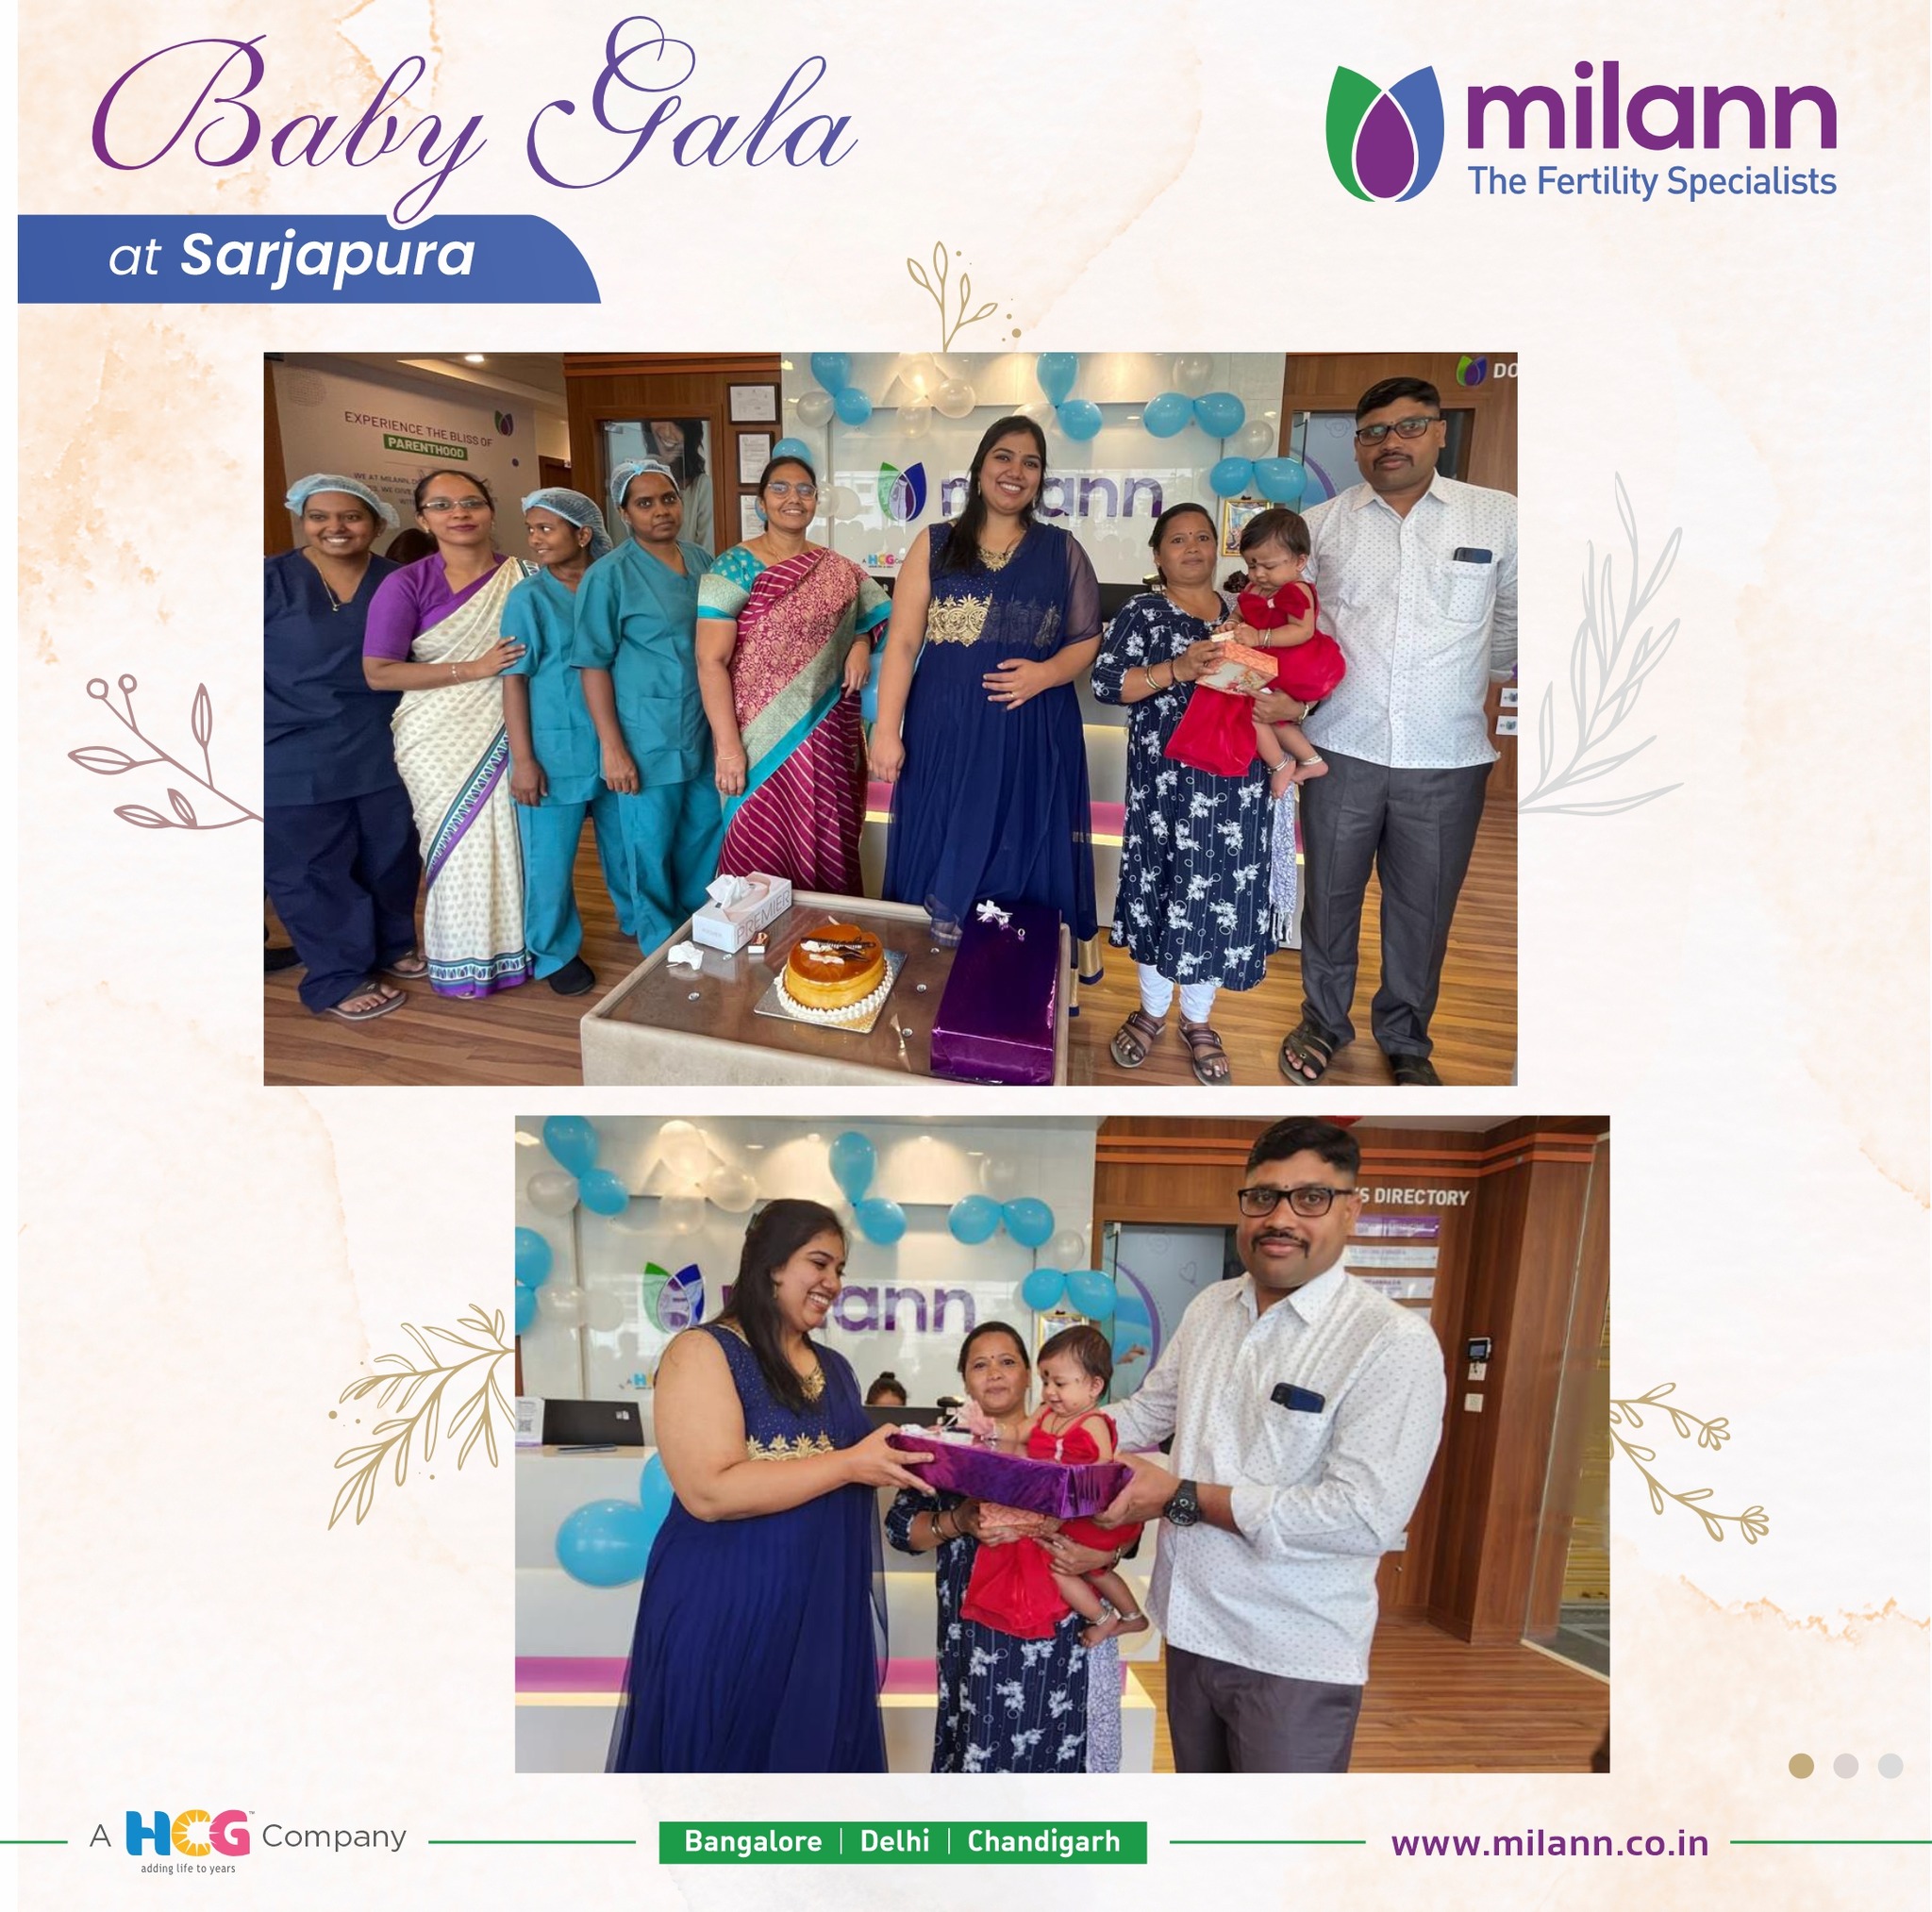 Baby Gala at Sarjapura